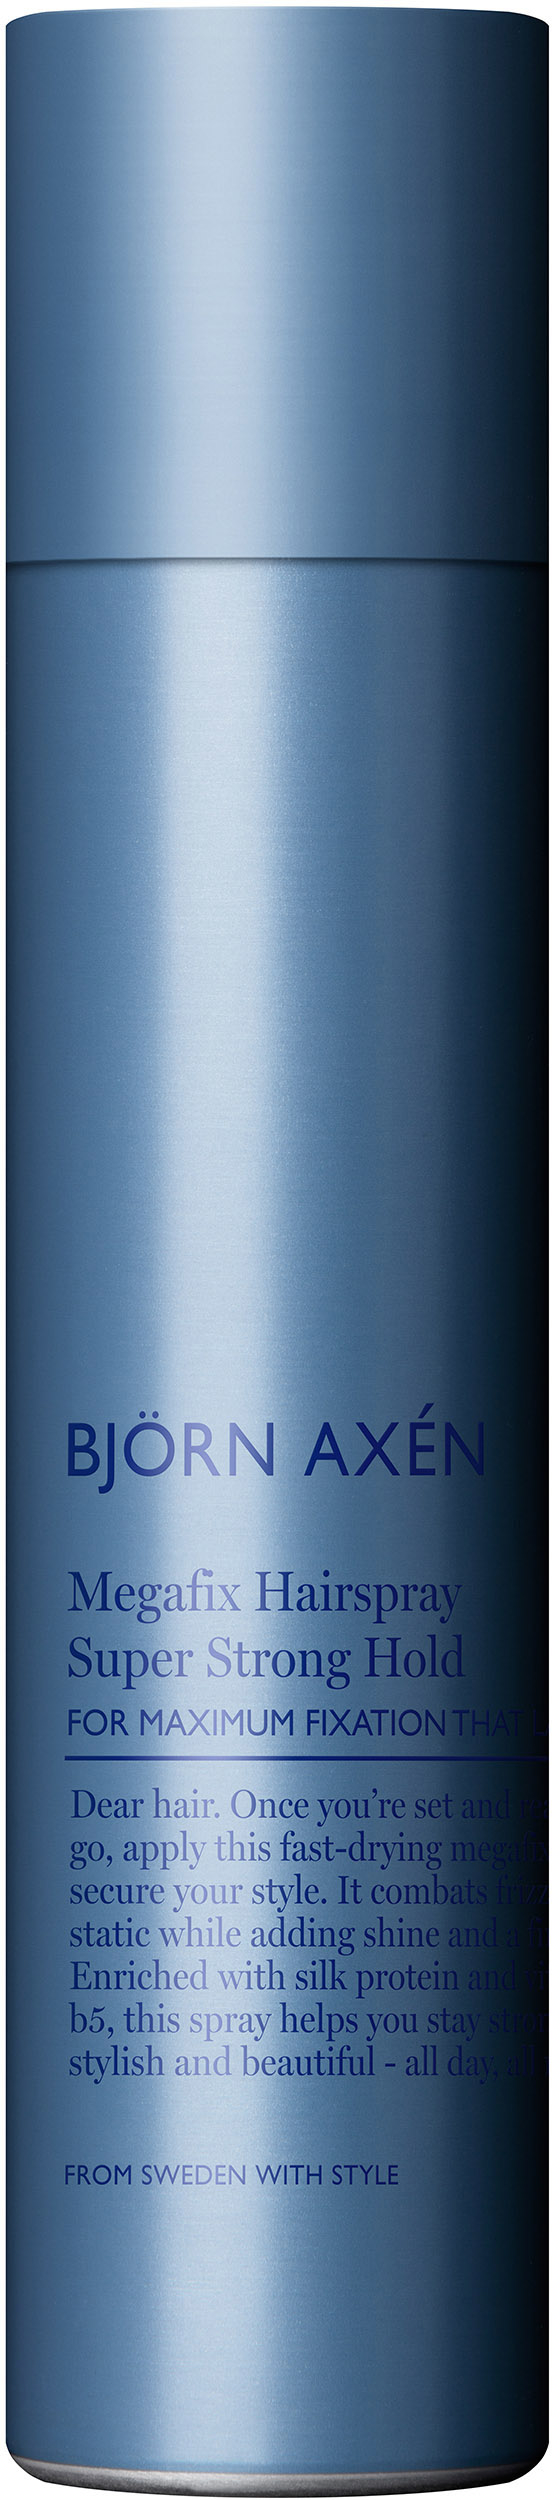 Björn Axén Megafix hairspray super strong hold 250 ml